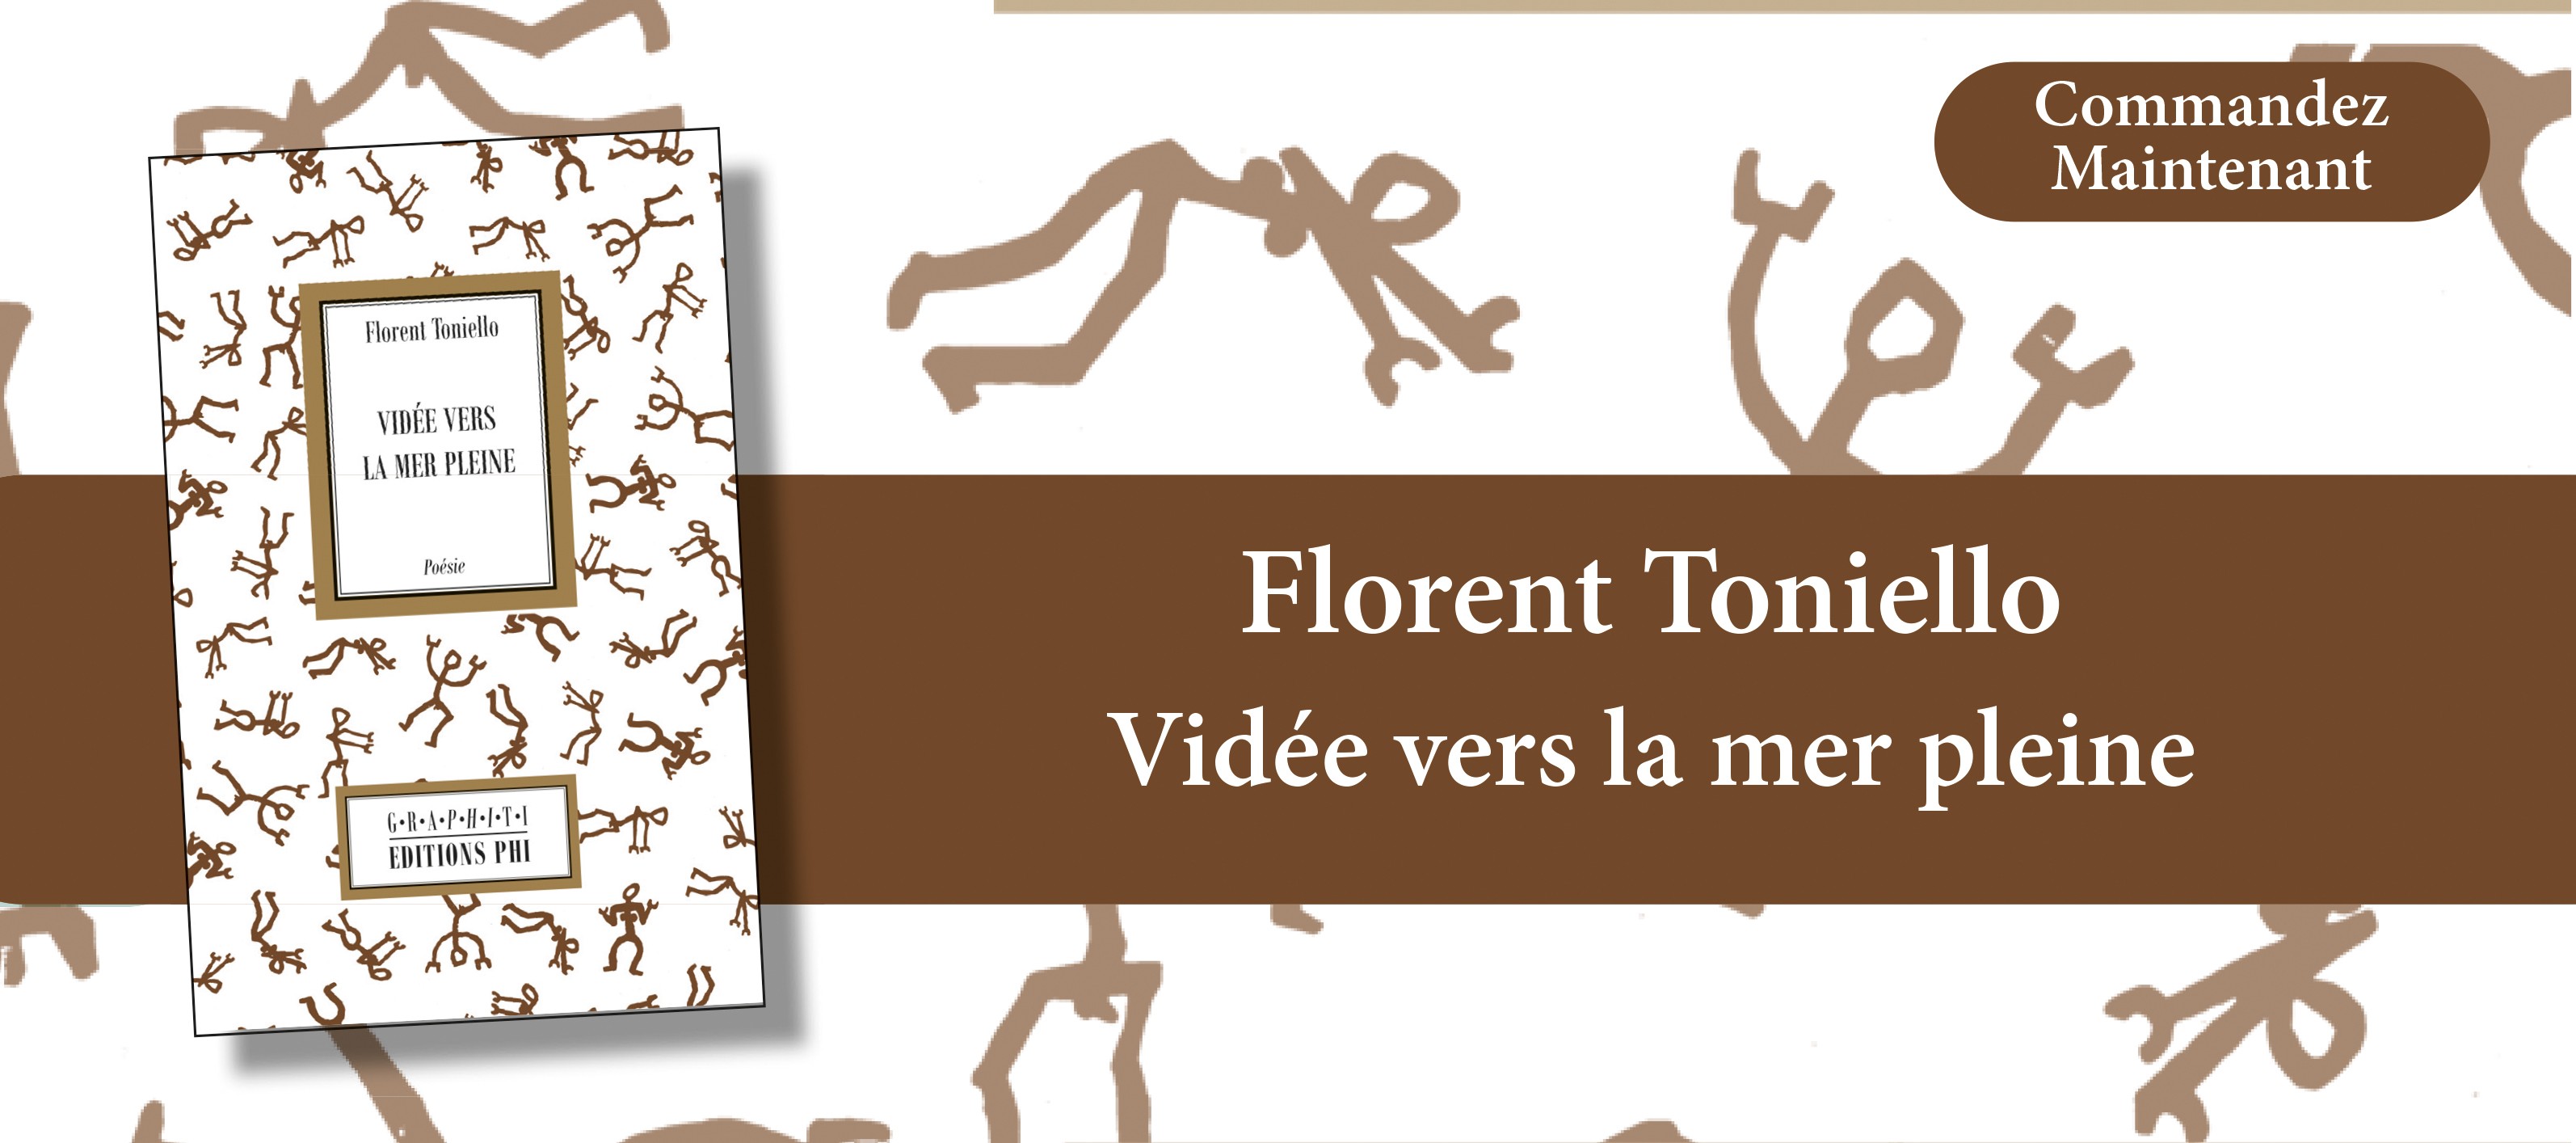 http://www.editionsphi.lu/fr/francais/517-florent-toniello-videe-vers-la-mer-pleine.html